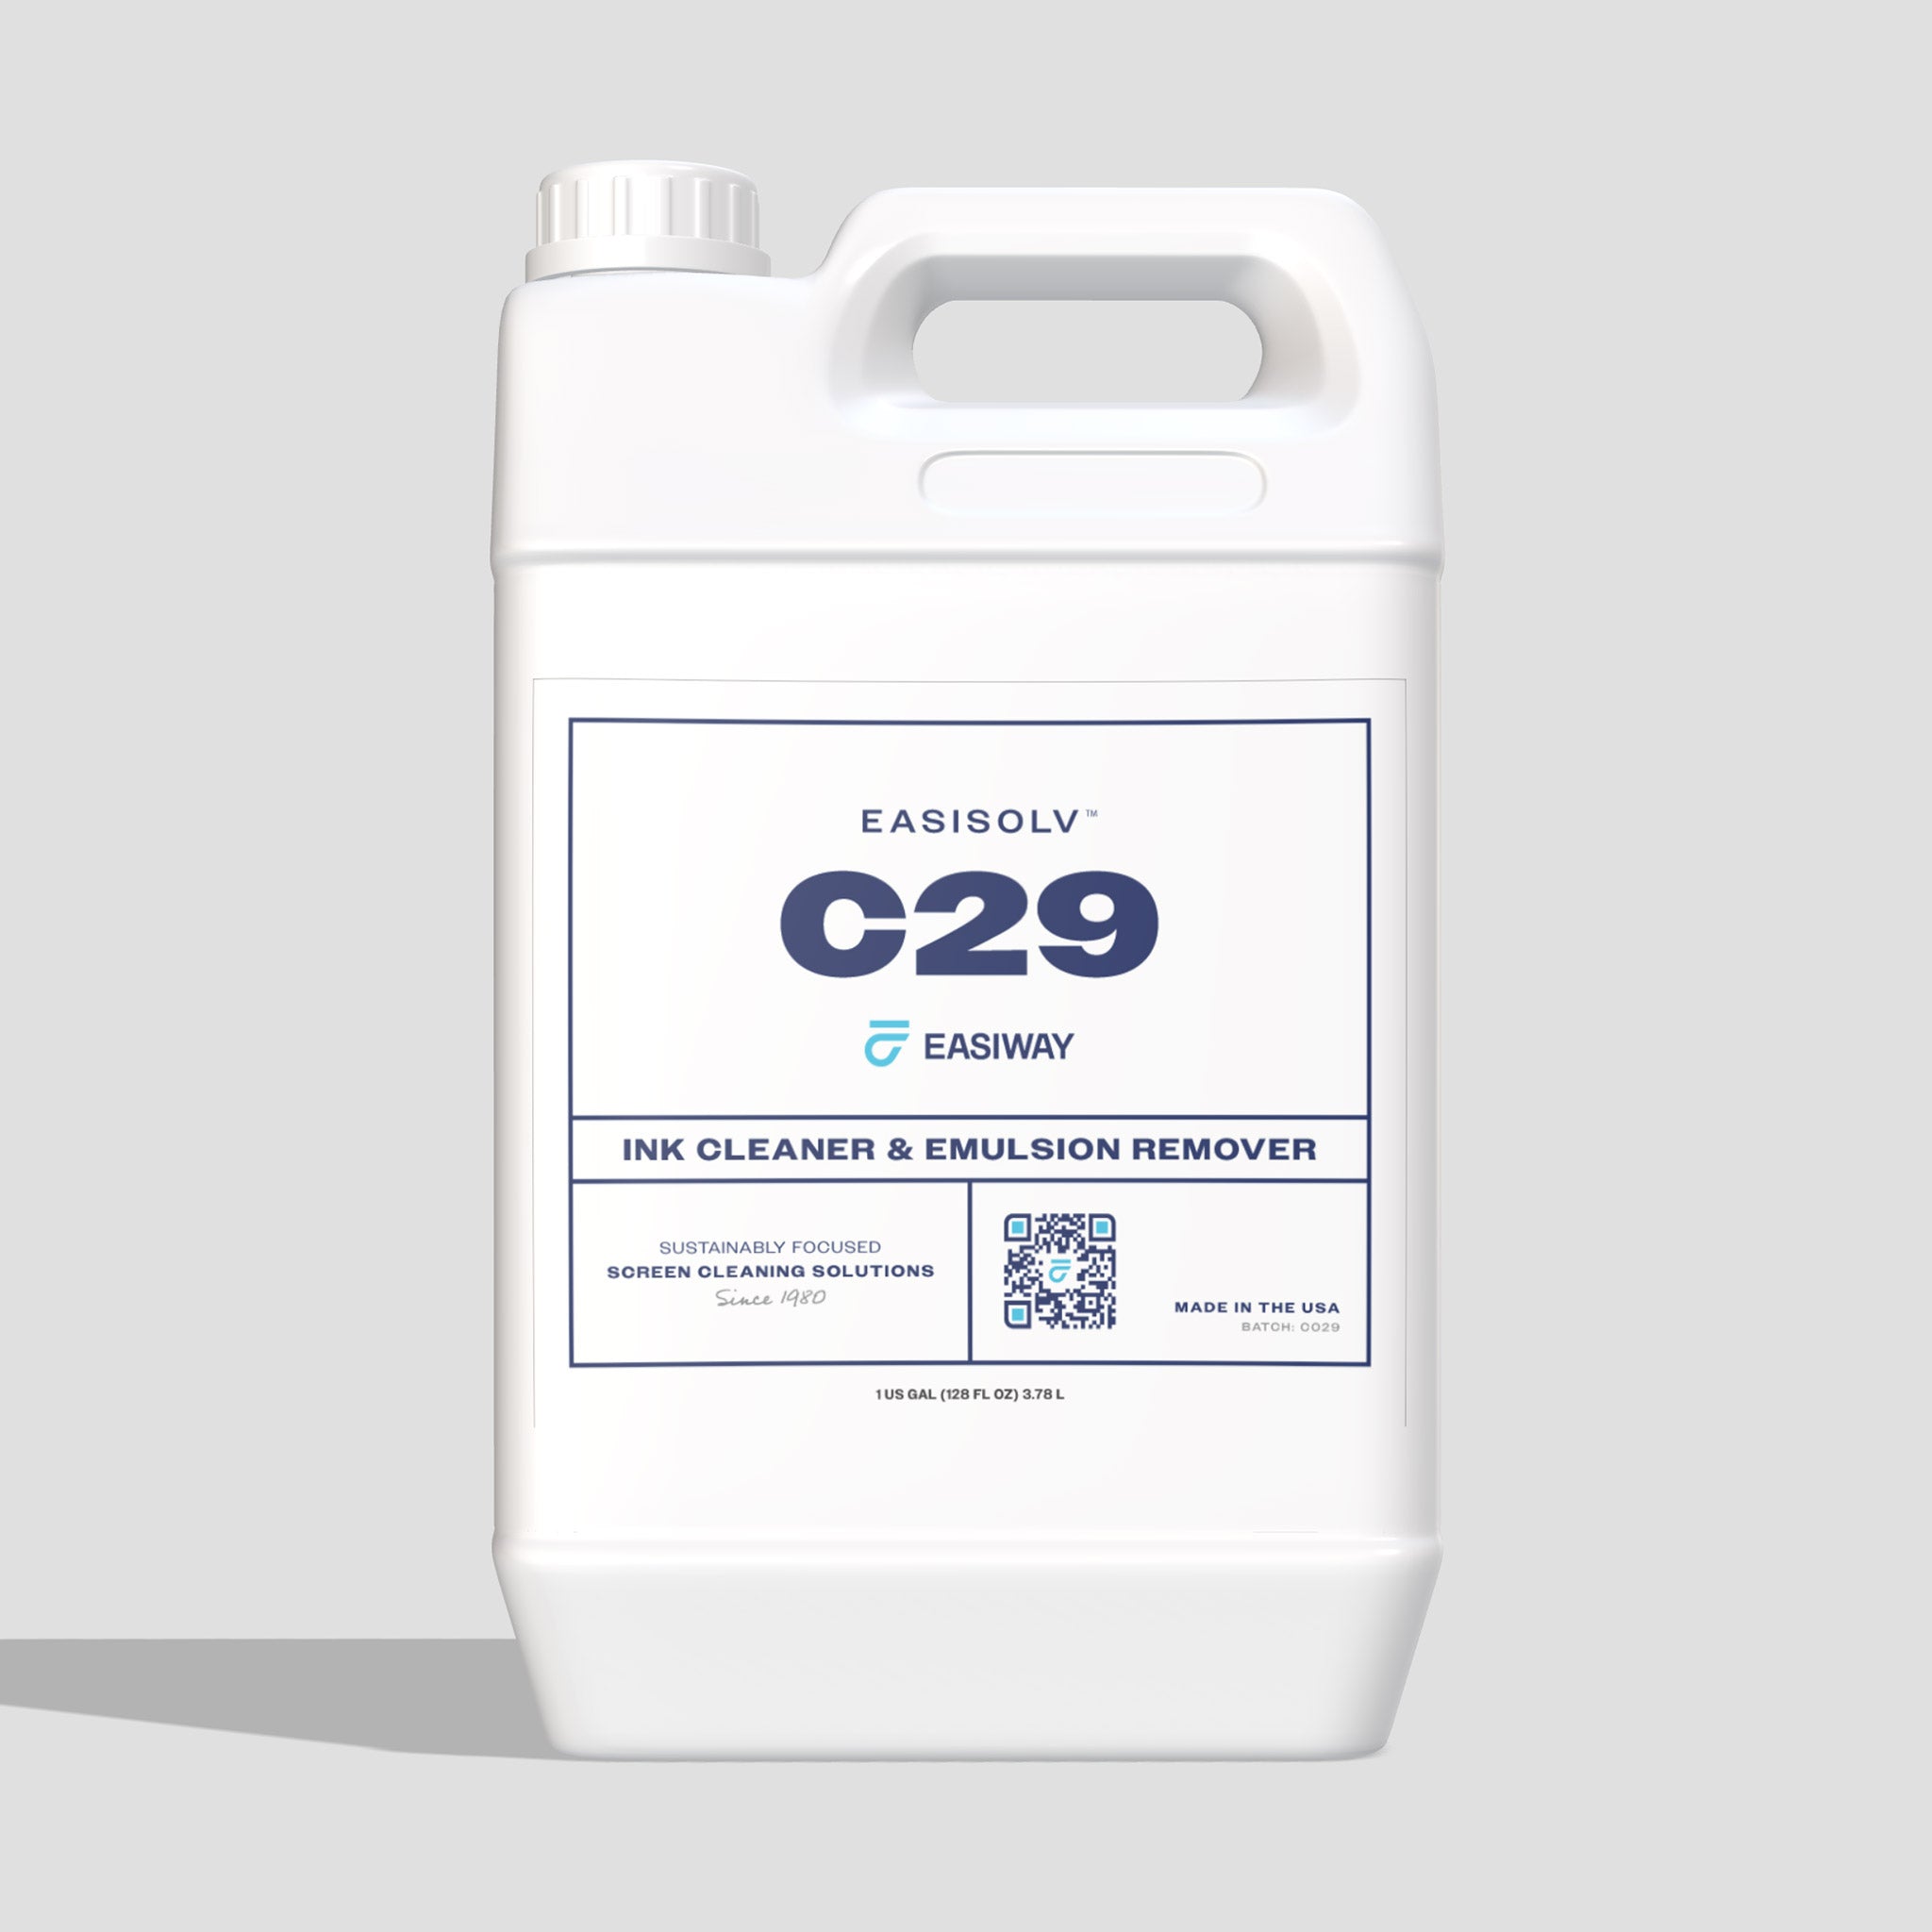 EasiSolv™ C29 Ink Cleaner & Emulsion Remover